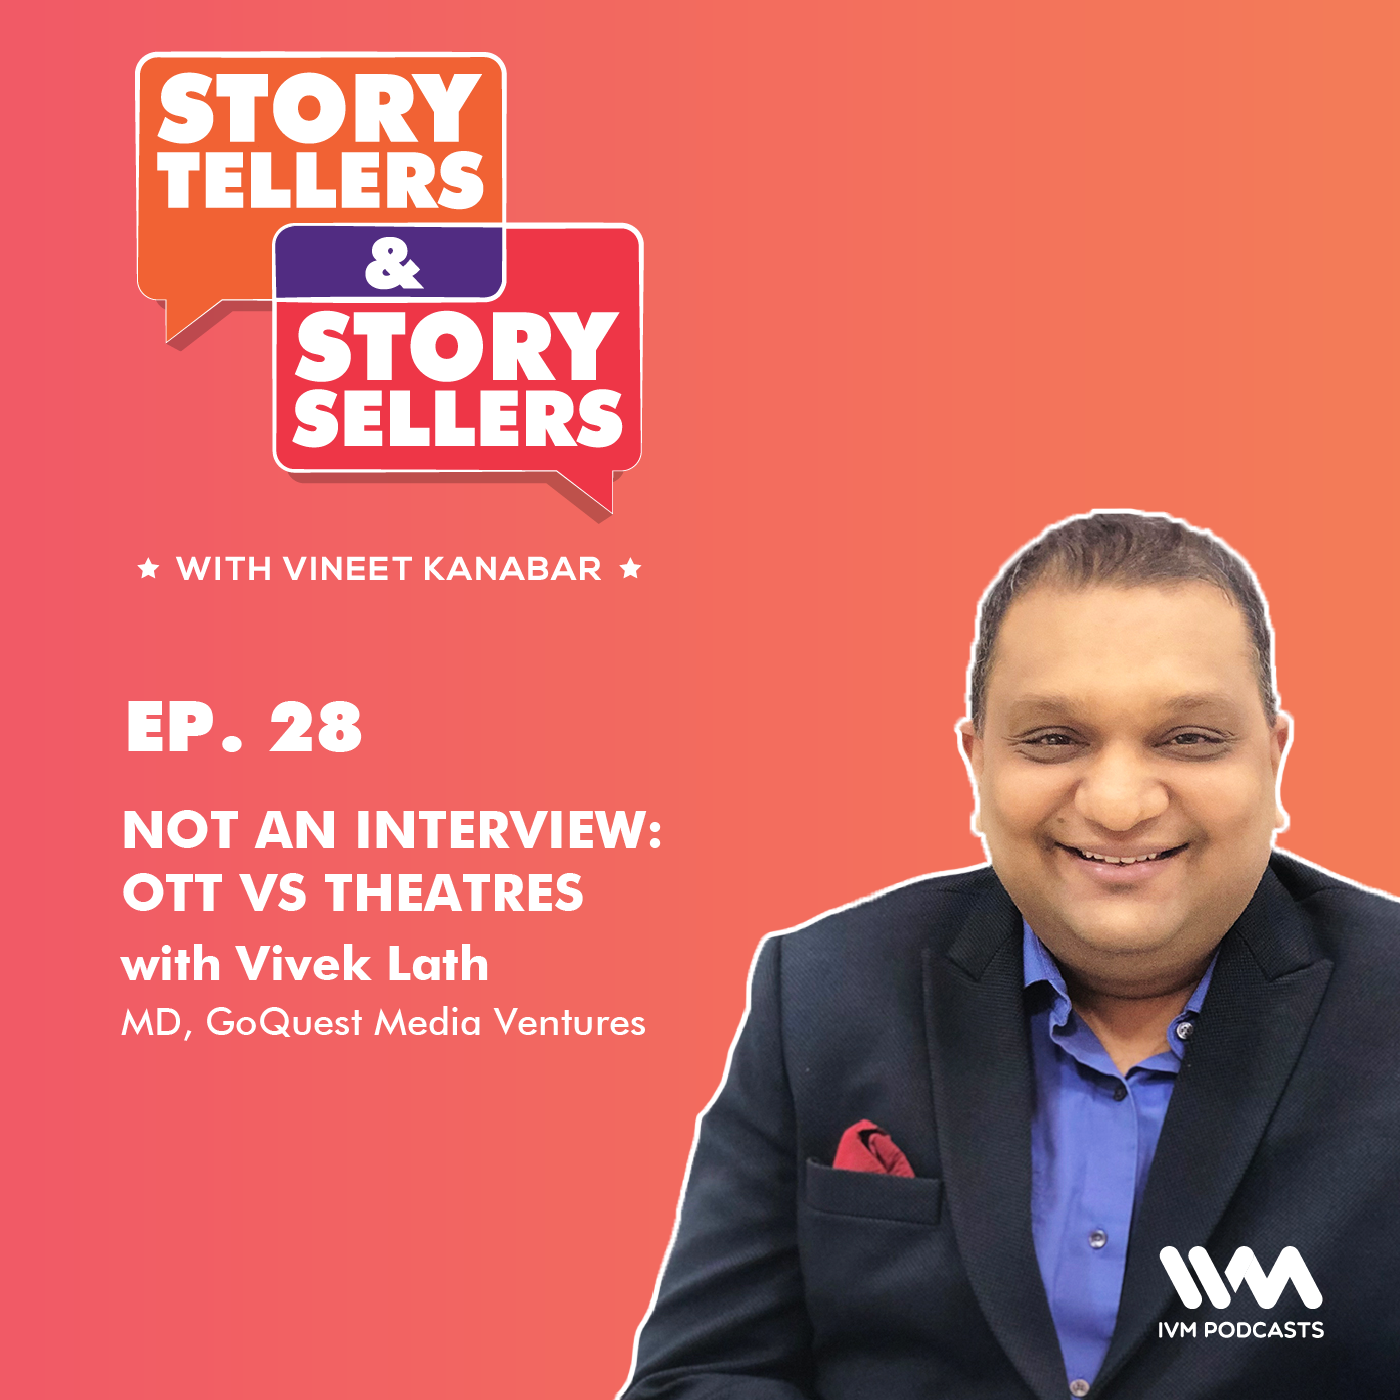 Vivek Lath Discusses OTT vs Theatres